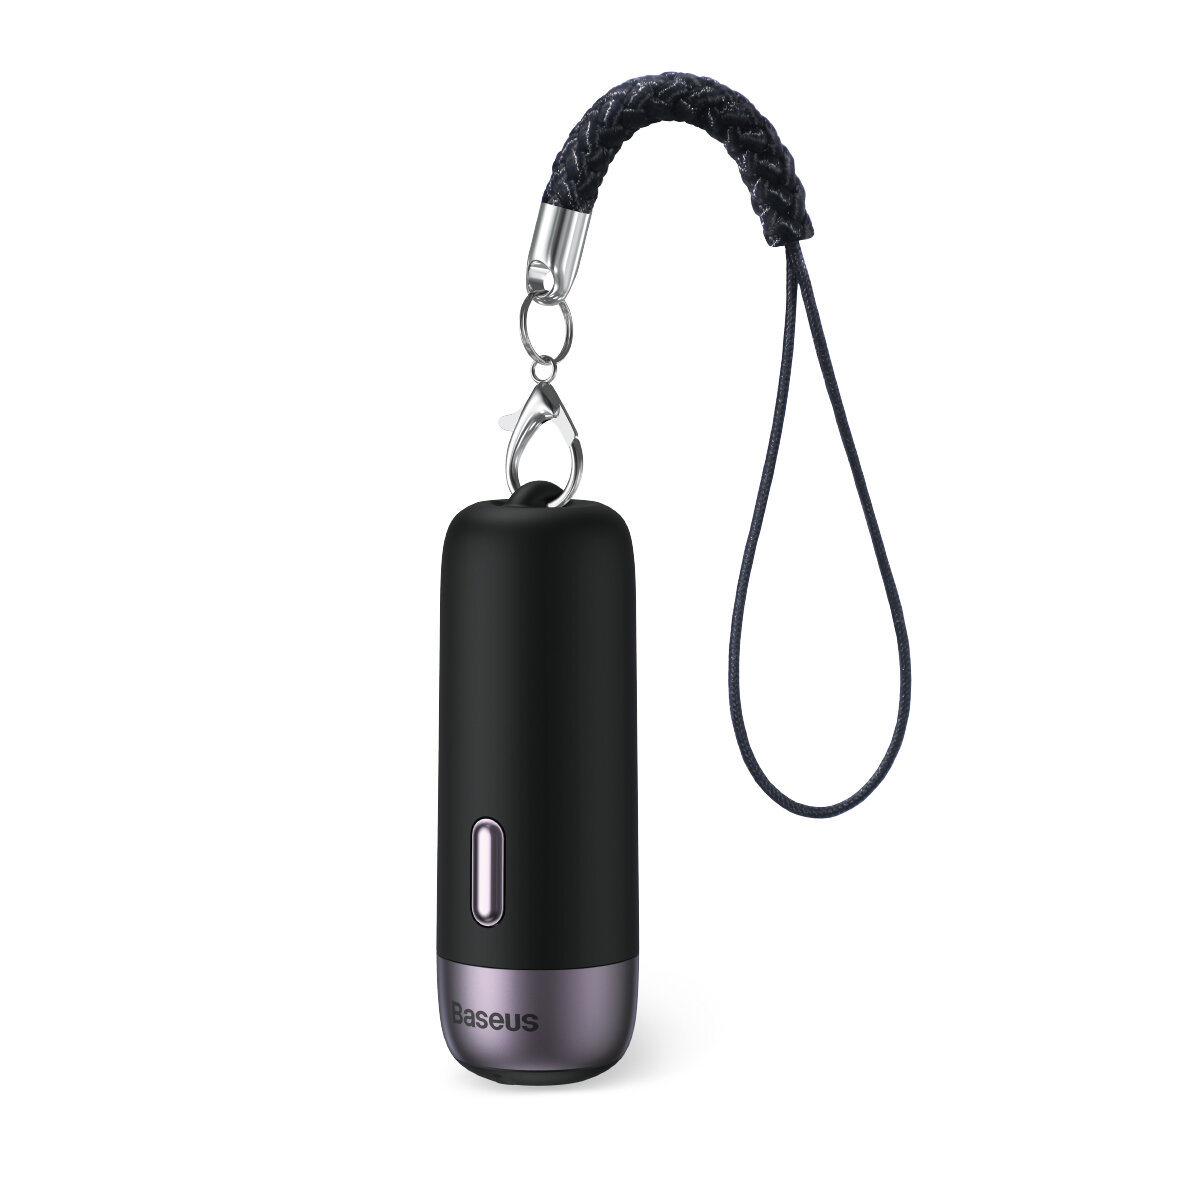 Baseus t3 Bluetooth tracker key Finder rechargeable GPS item Child Locator ne